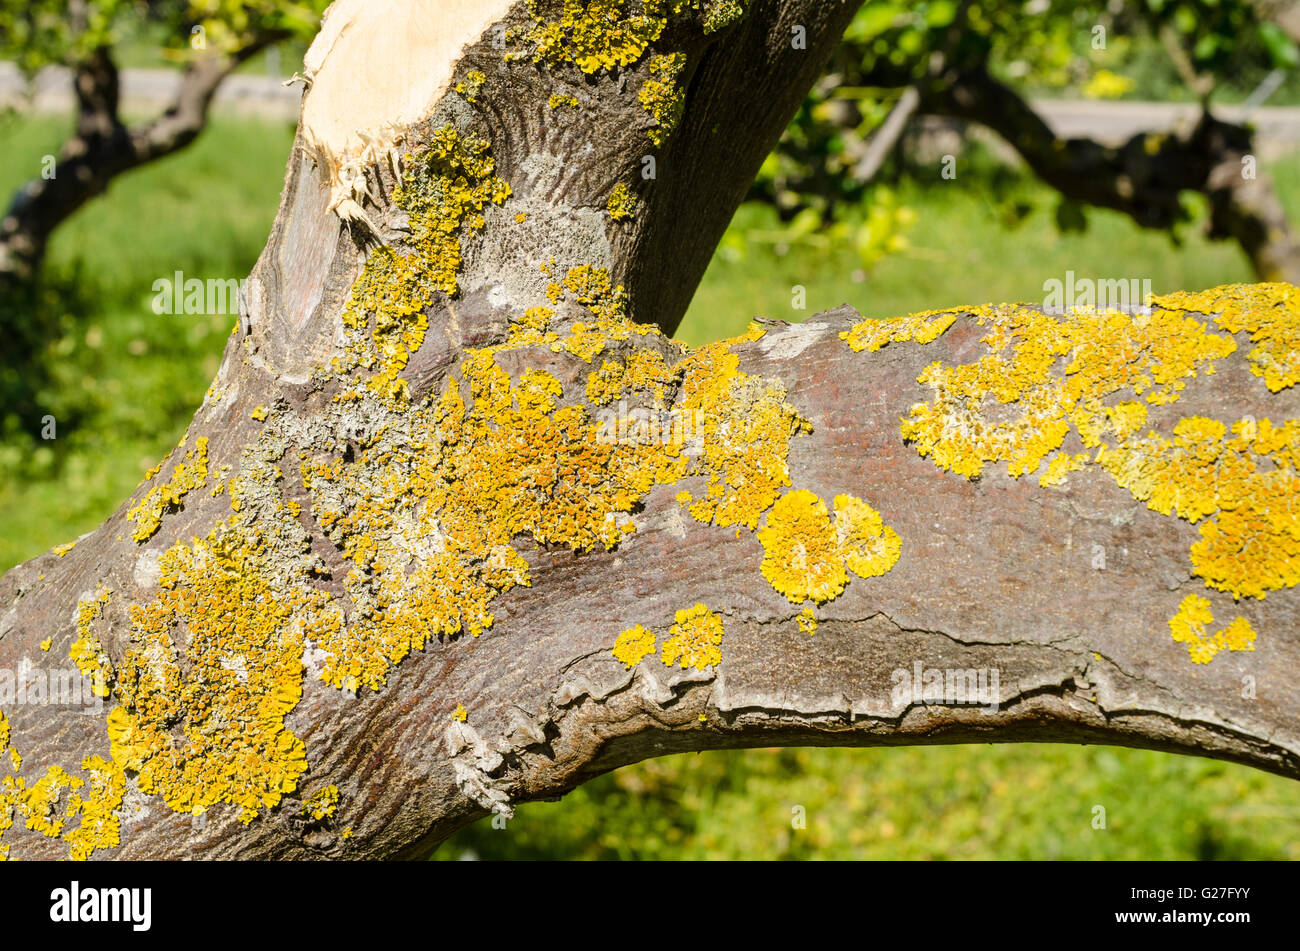 Fungus pest on a lemon tree trunk Stock Photo